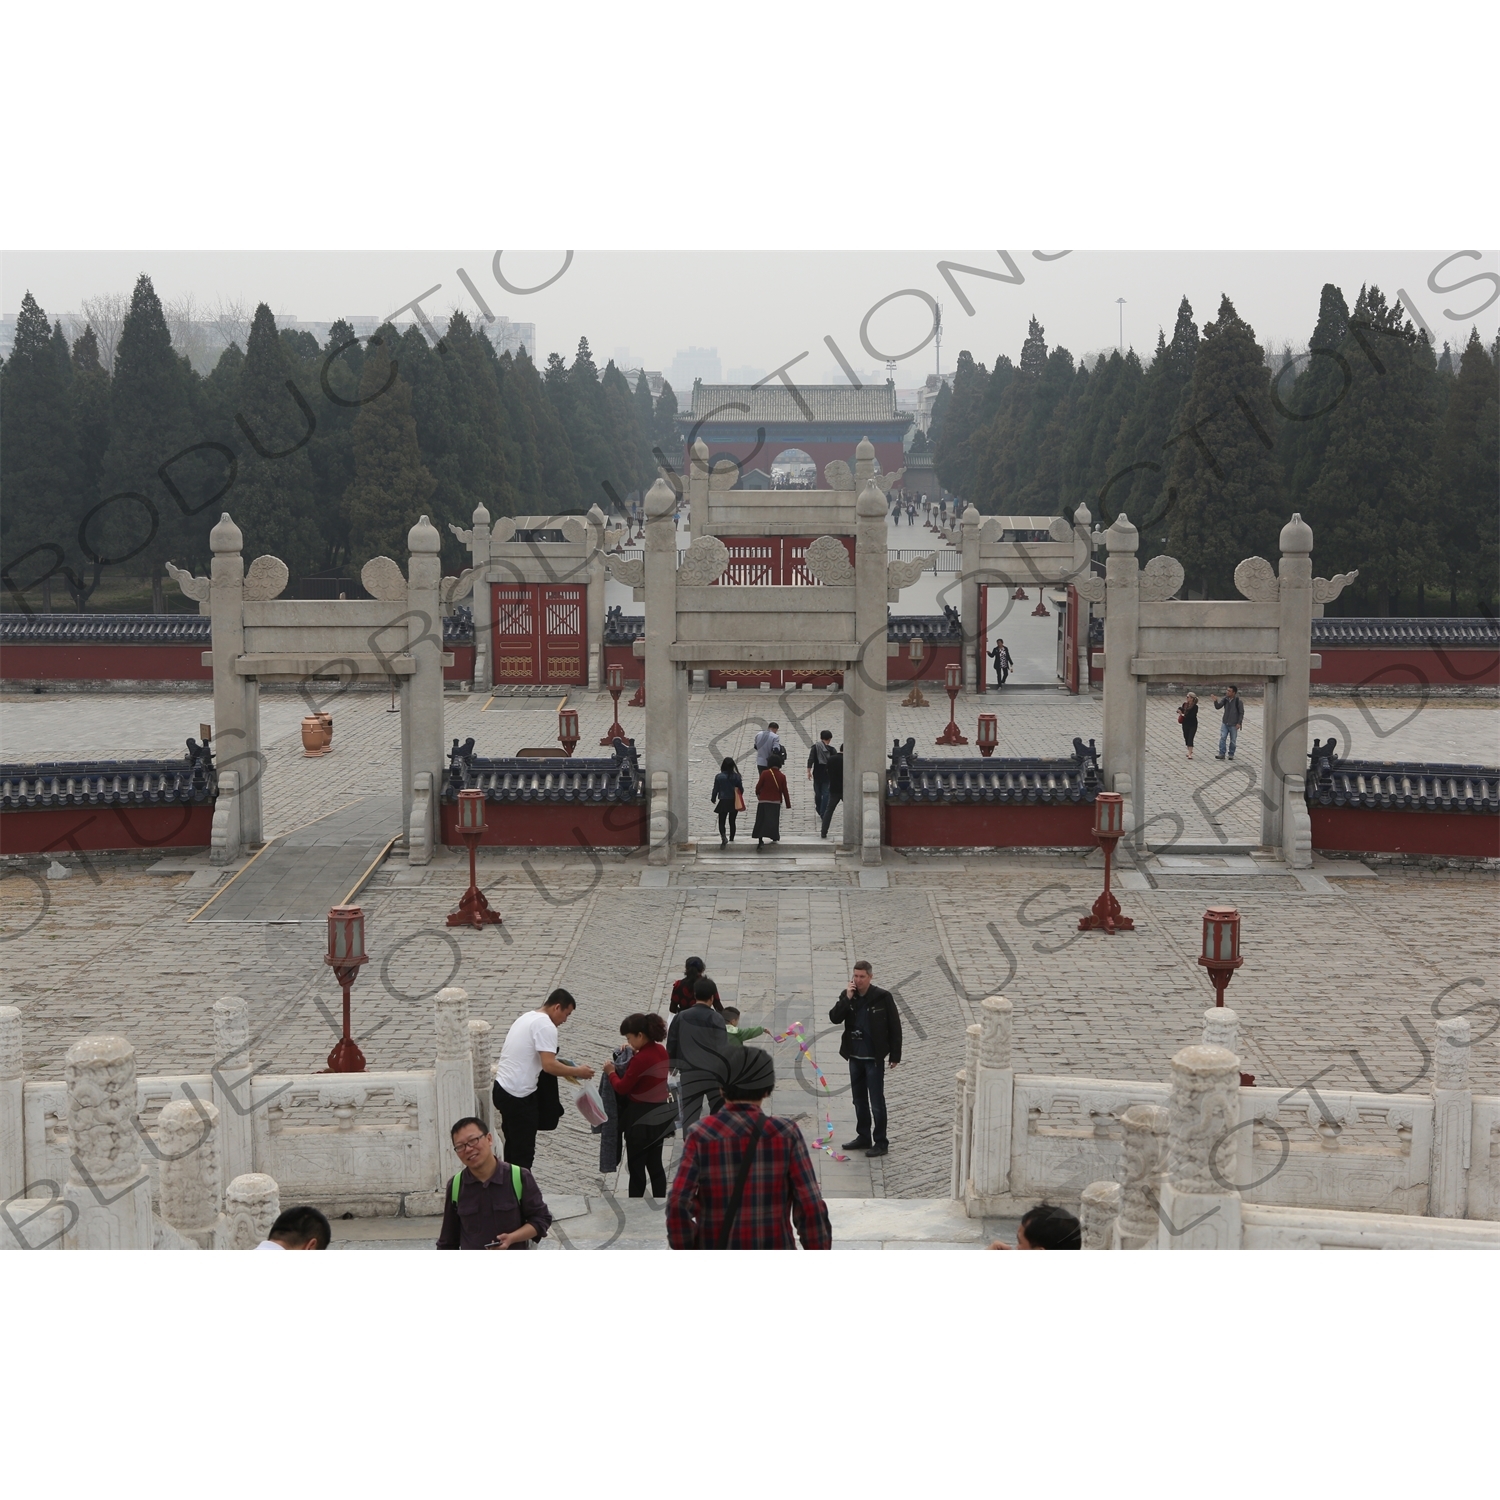 South Gates of the Circular Mound Altar (Yuanqiu Tan) in the Temple of Heaven (Tiantan) in Beijing